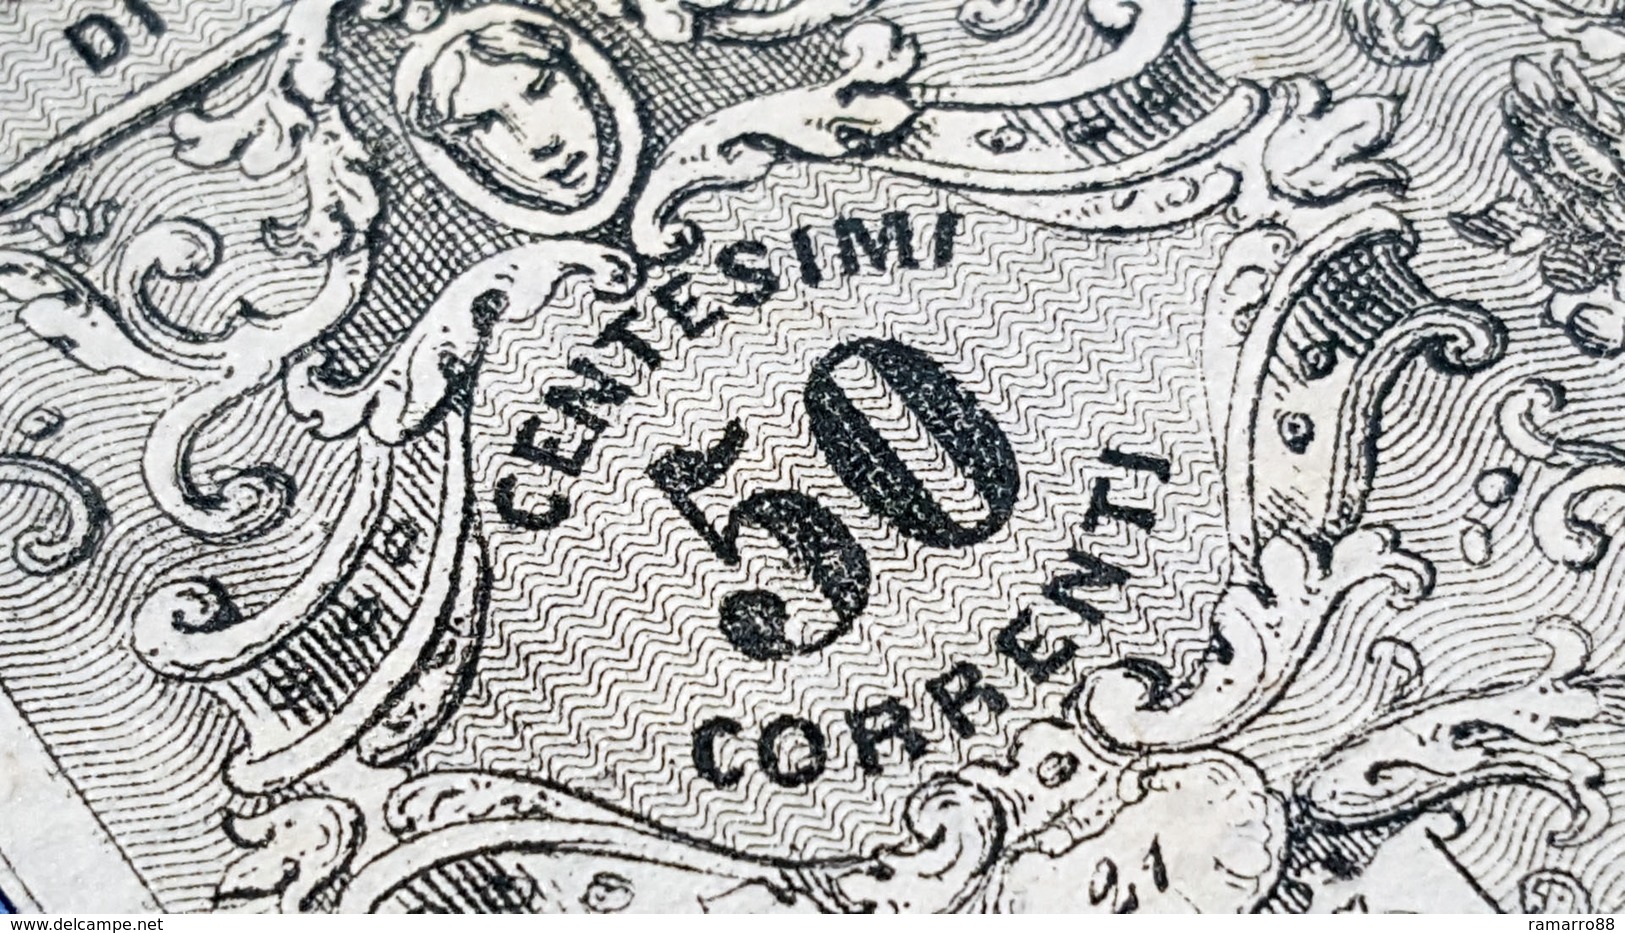 Italy Venezia 1 Lira Corrente 1849 R4 (2 x 50 Centesimi - Non Divisa) pS191a Sup- / Au-